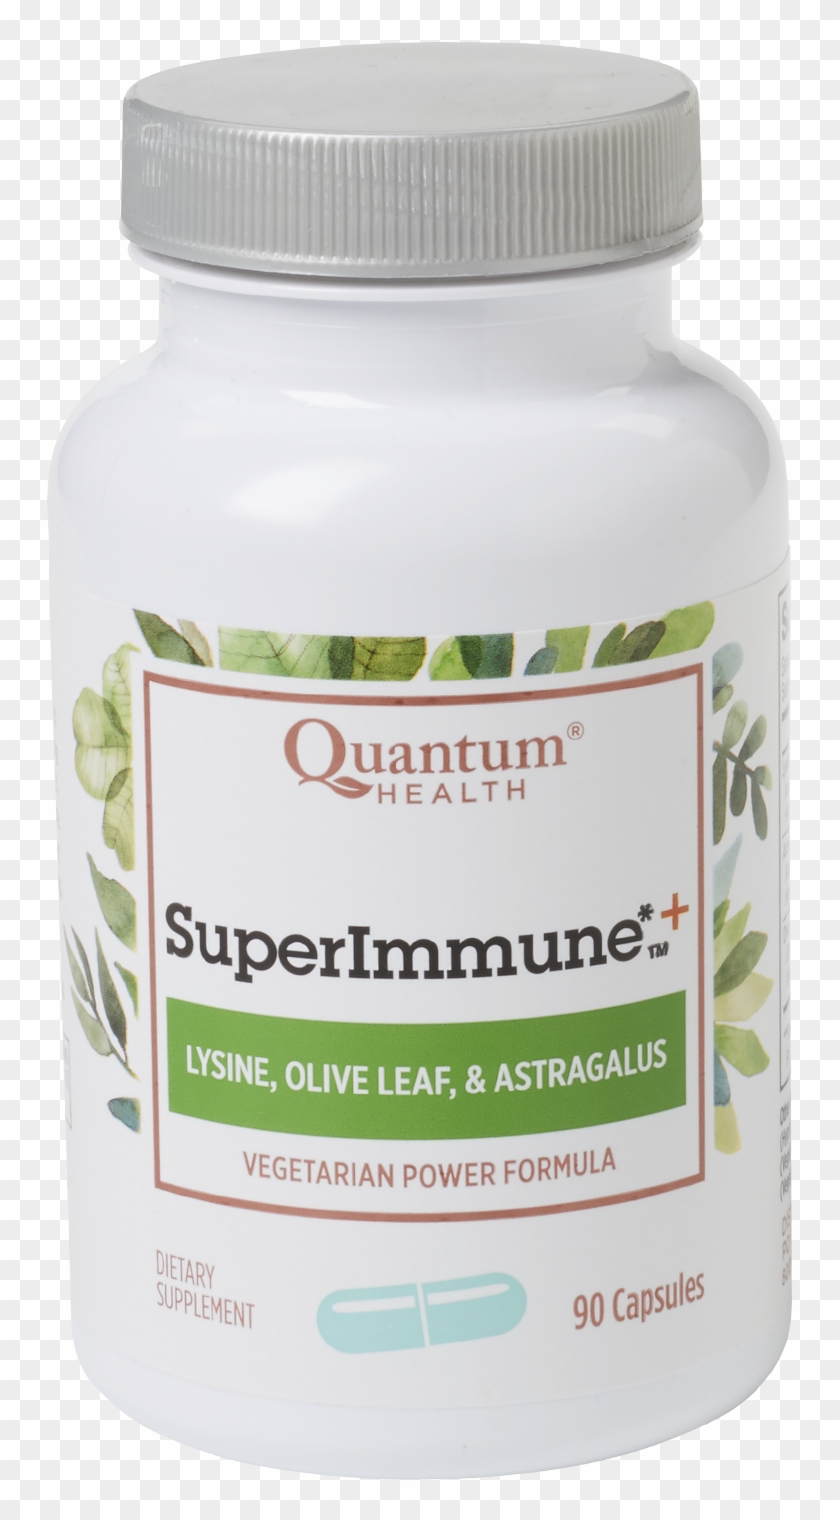 Lysine, Olive Leaf, & Astragalus Dietary Supplement - Quantum Health Clipart #3940745